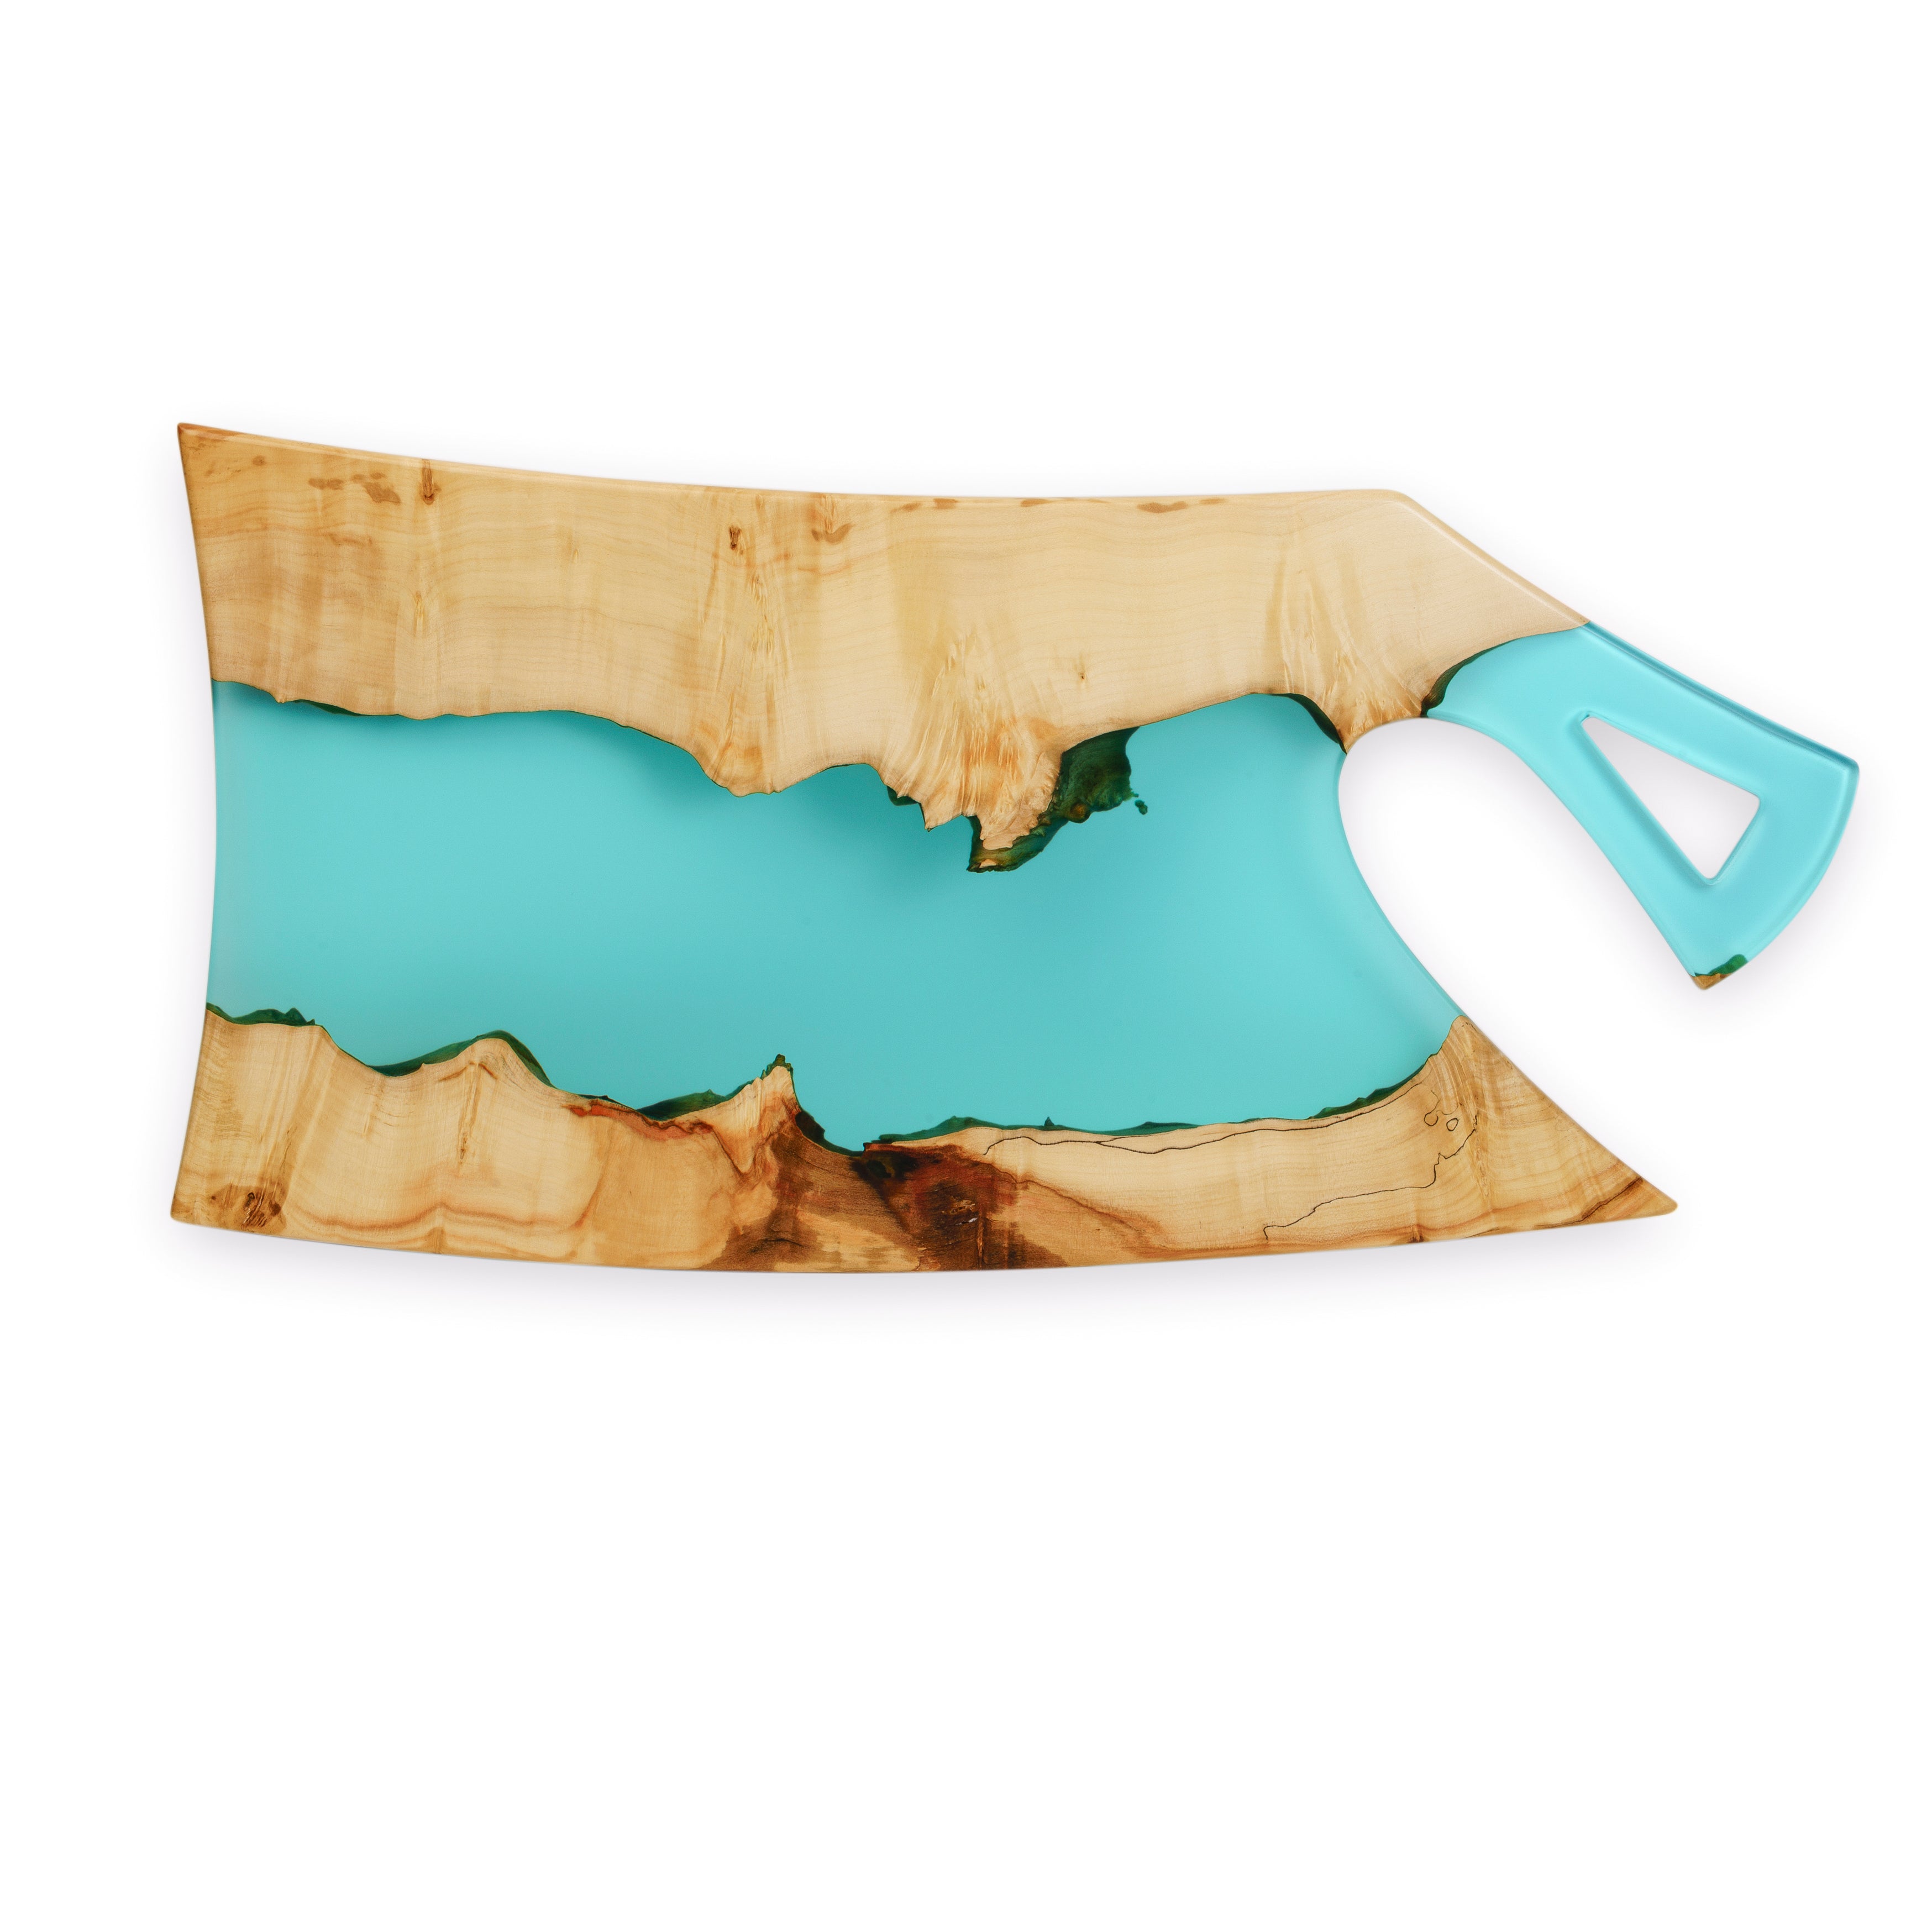 Wood & Resin Charcuterie Board CLEAVER – Maple Aqua Blue